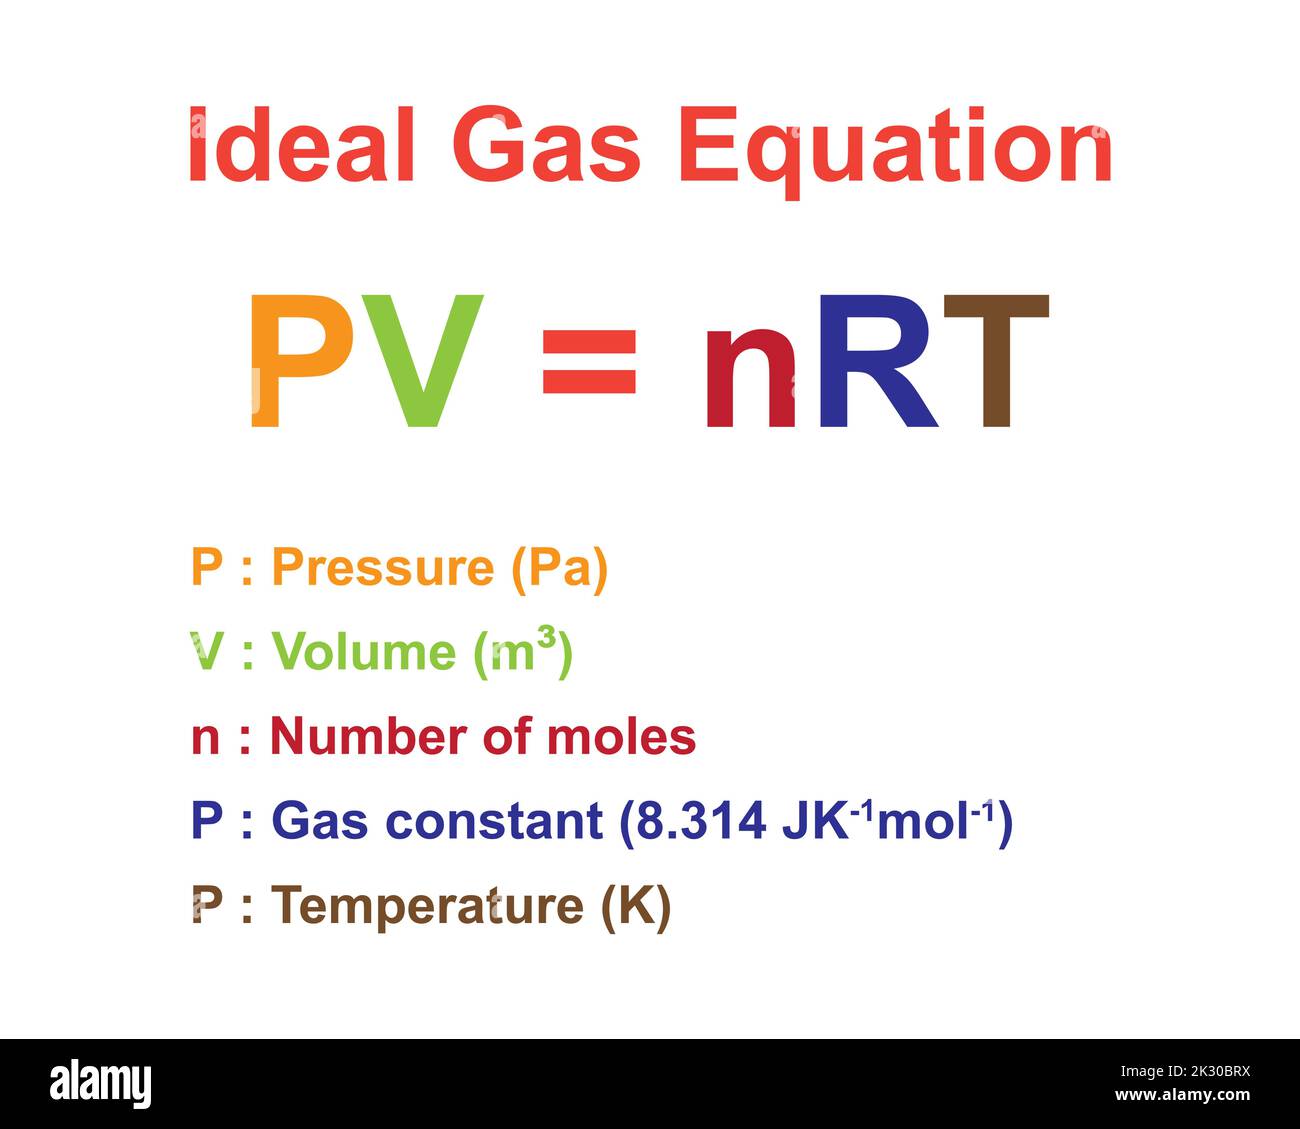 https://c8.alamy.com/comp/2K30BRX/pv-=-nrt-ideal-gas-law-brings-together-gas-properties-the-most-important-formula-in-leak-testing-vector-illustration-2K30BRX.jpg